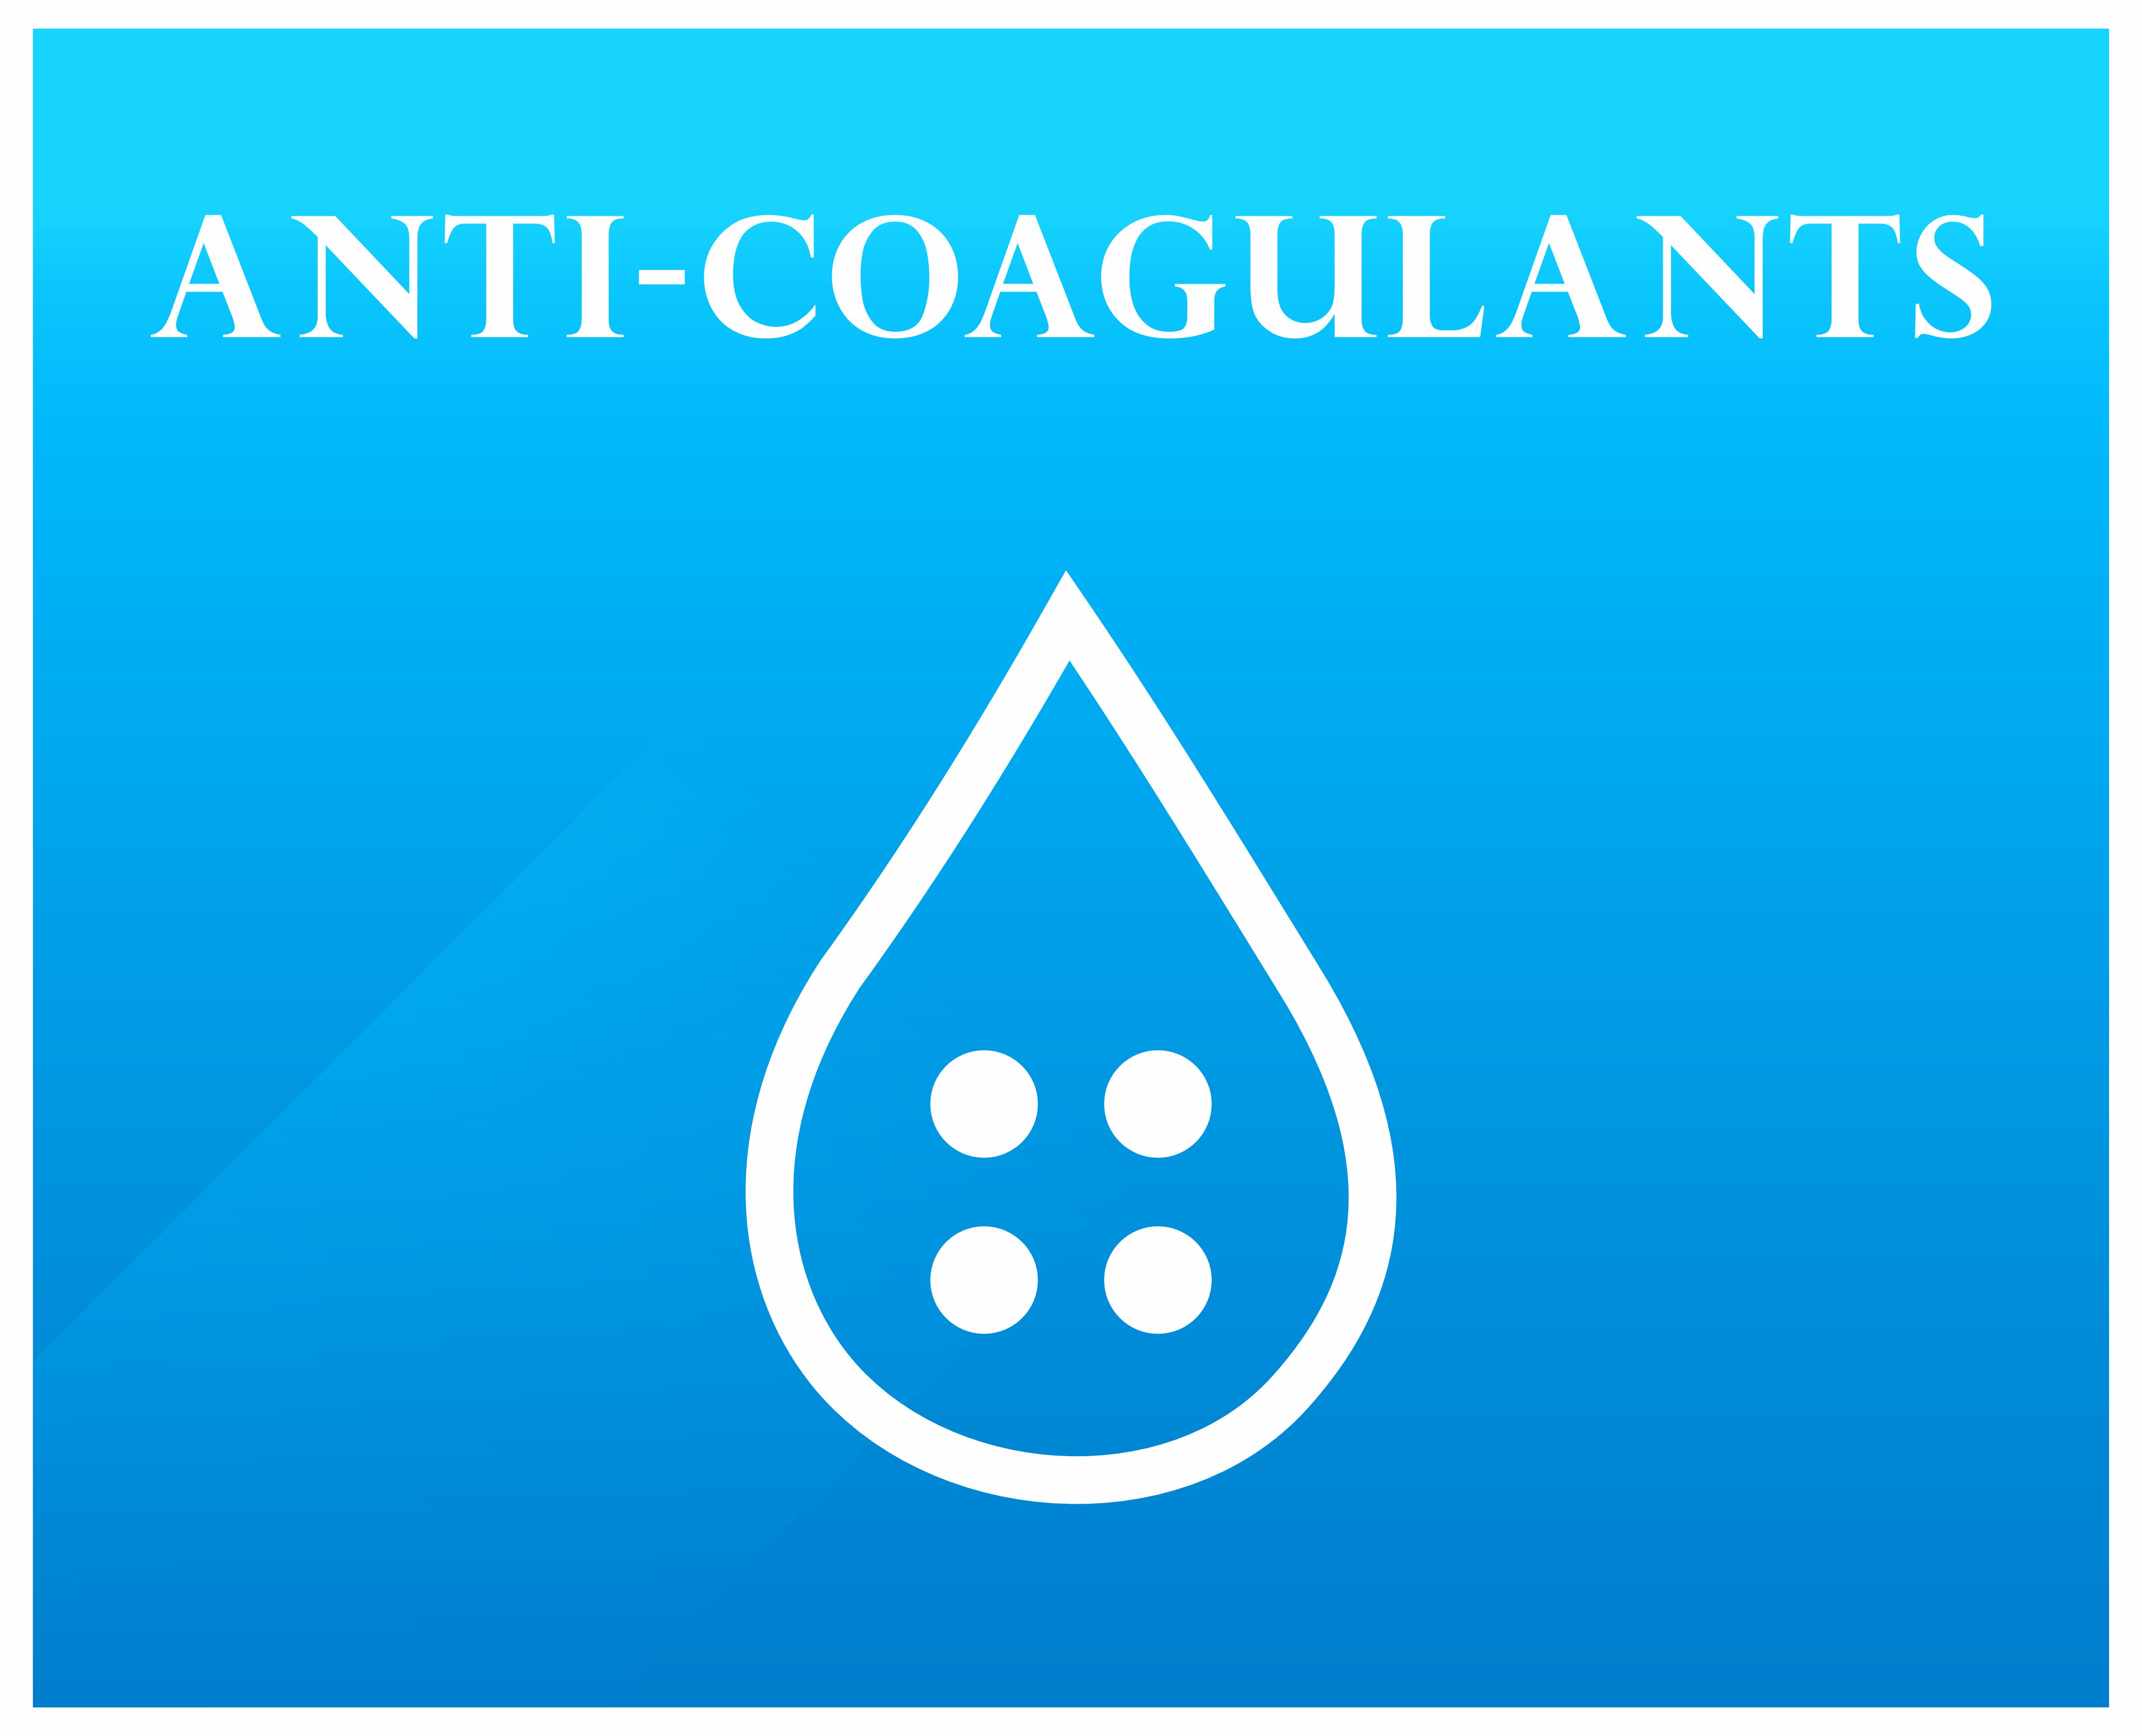 Anti-Coagulants